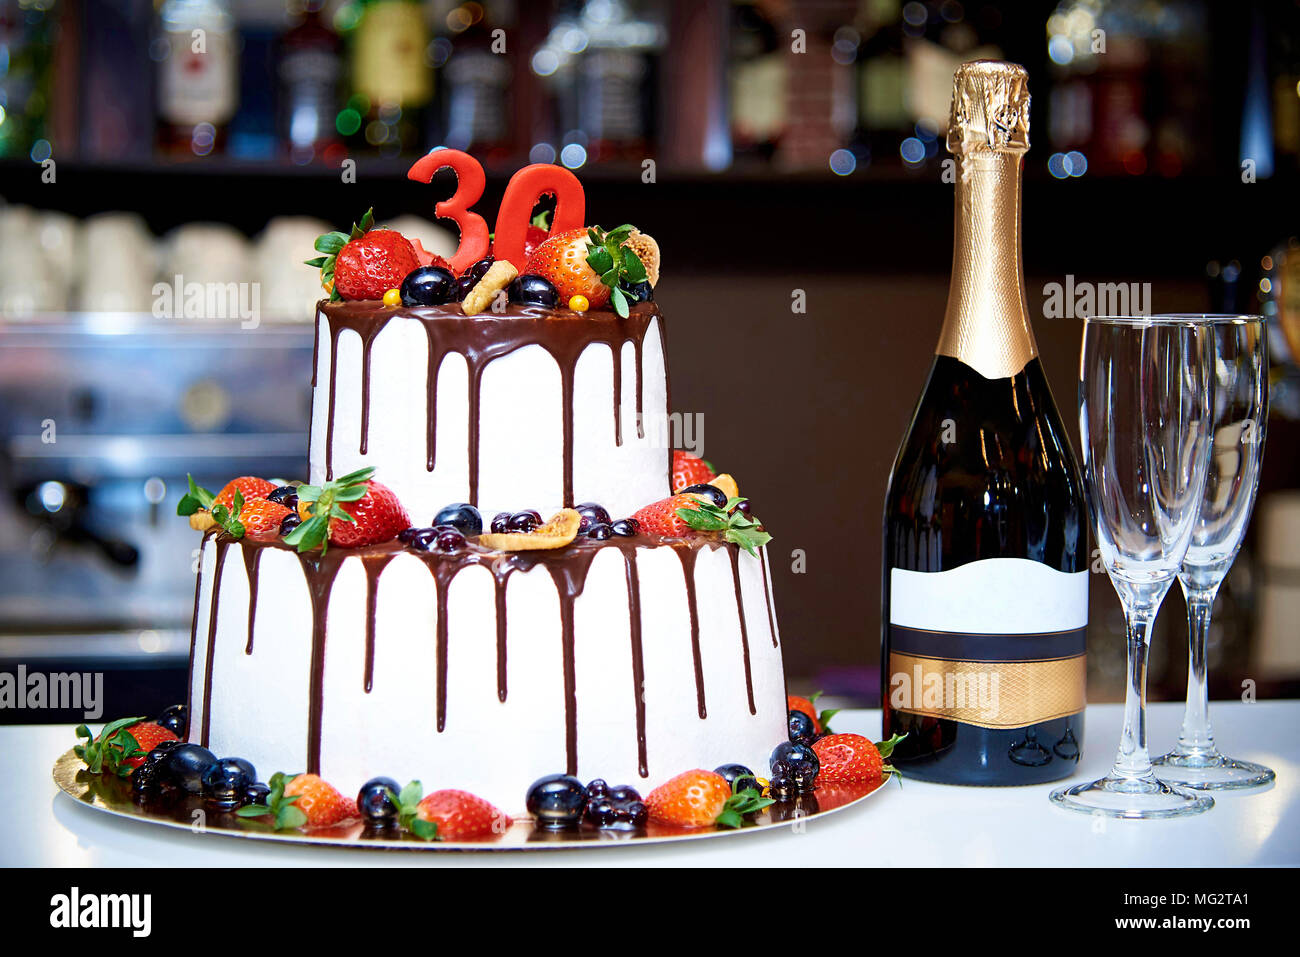 Chocolate Cake Champagne Banque D Image Et Photos Alamy